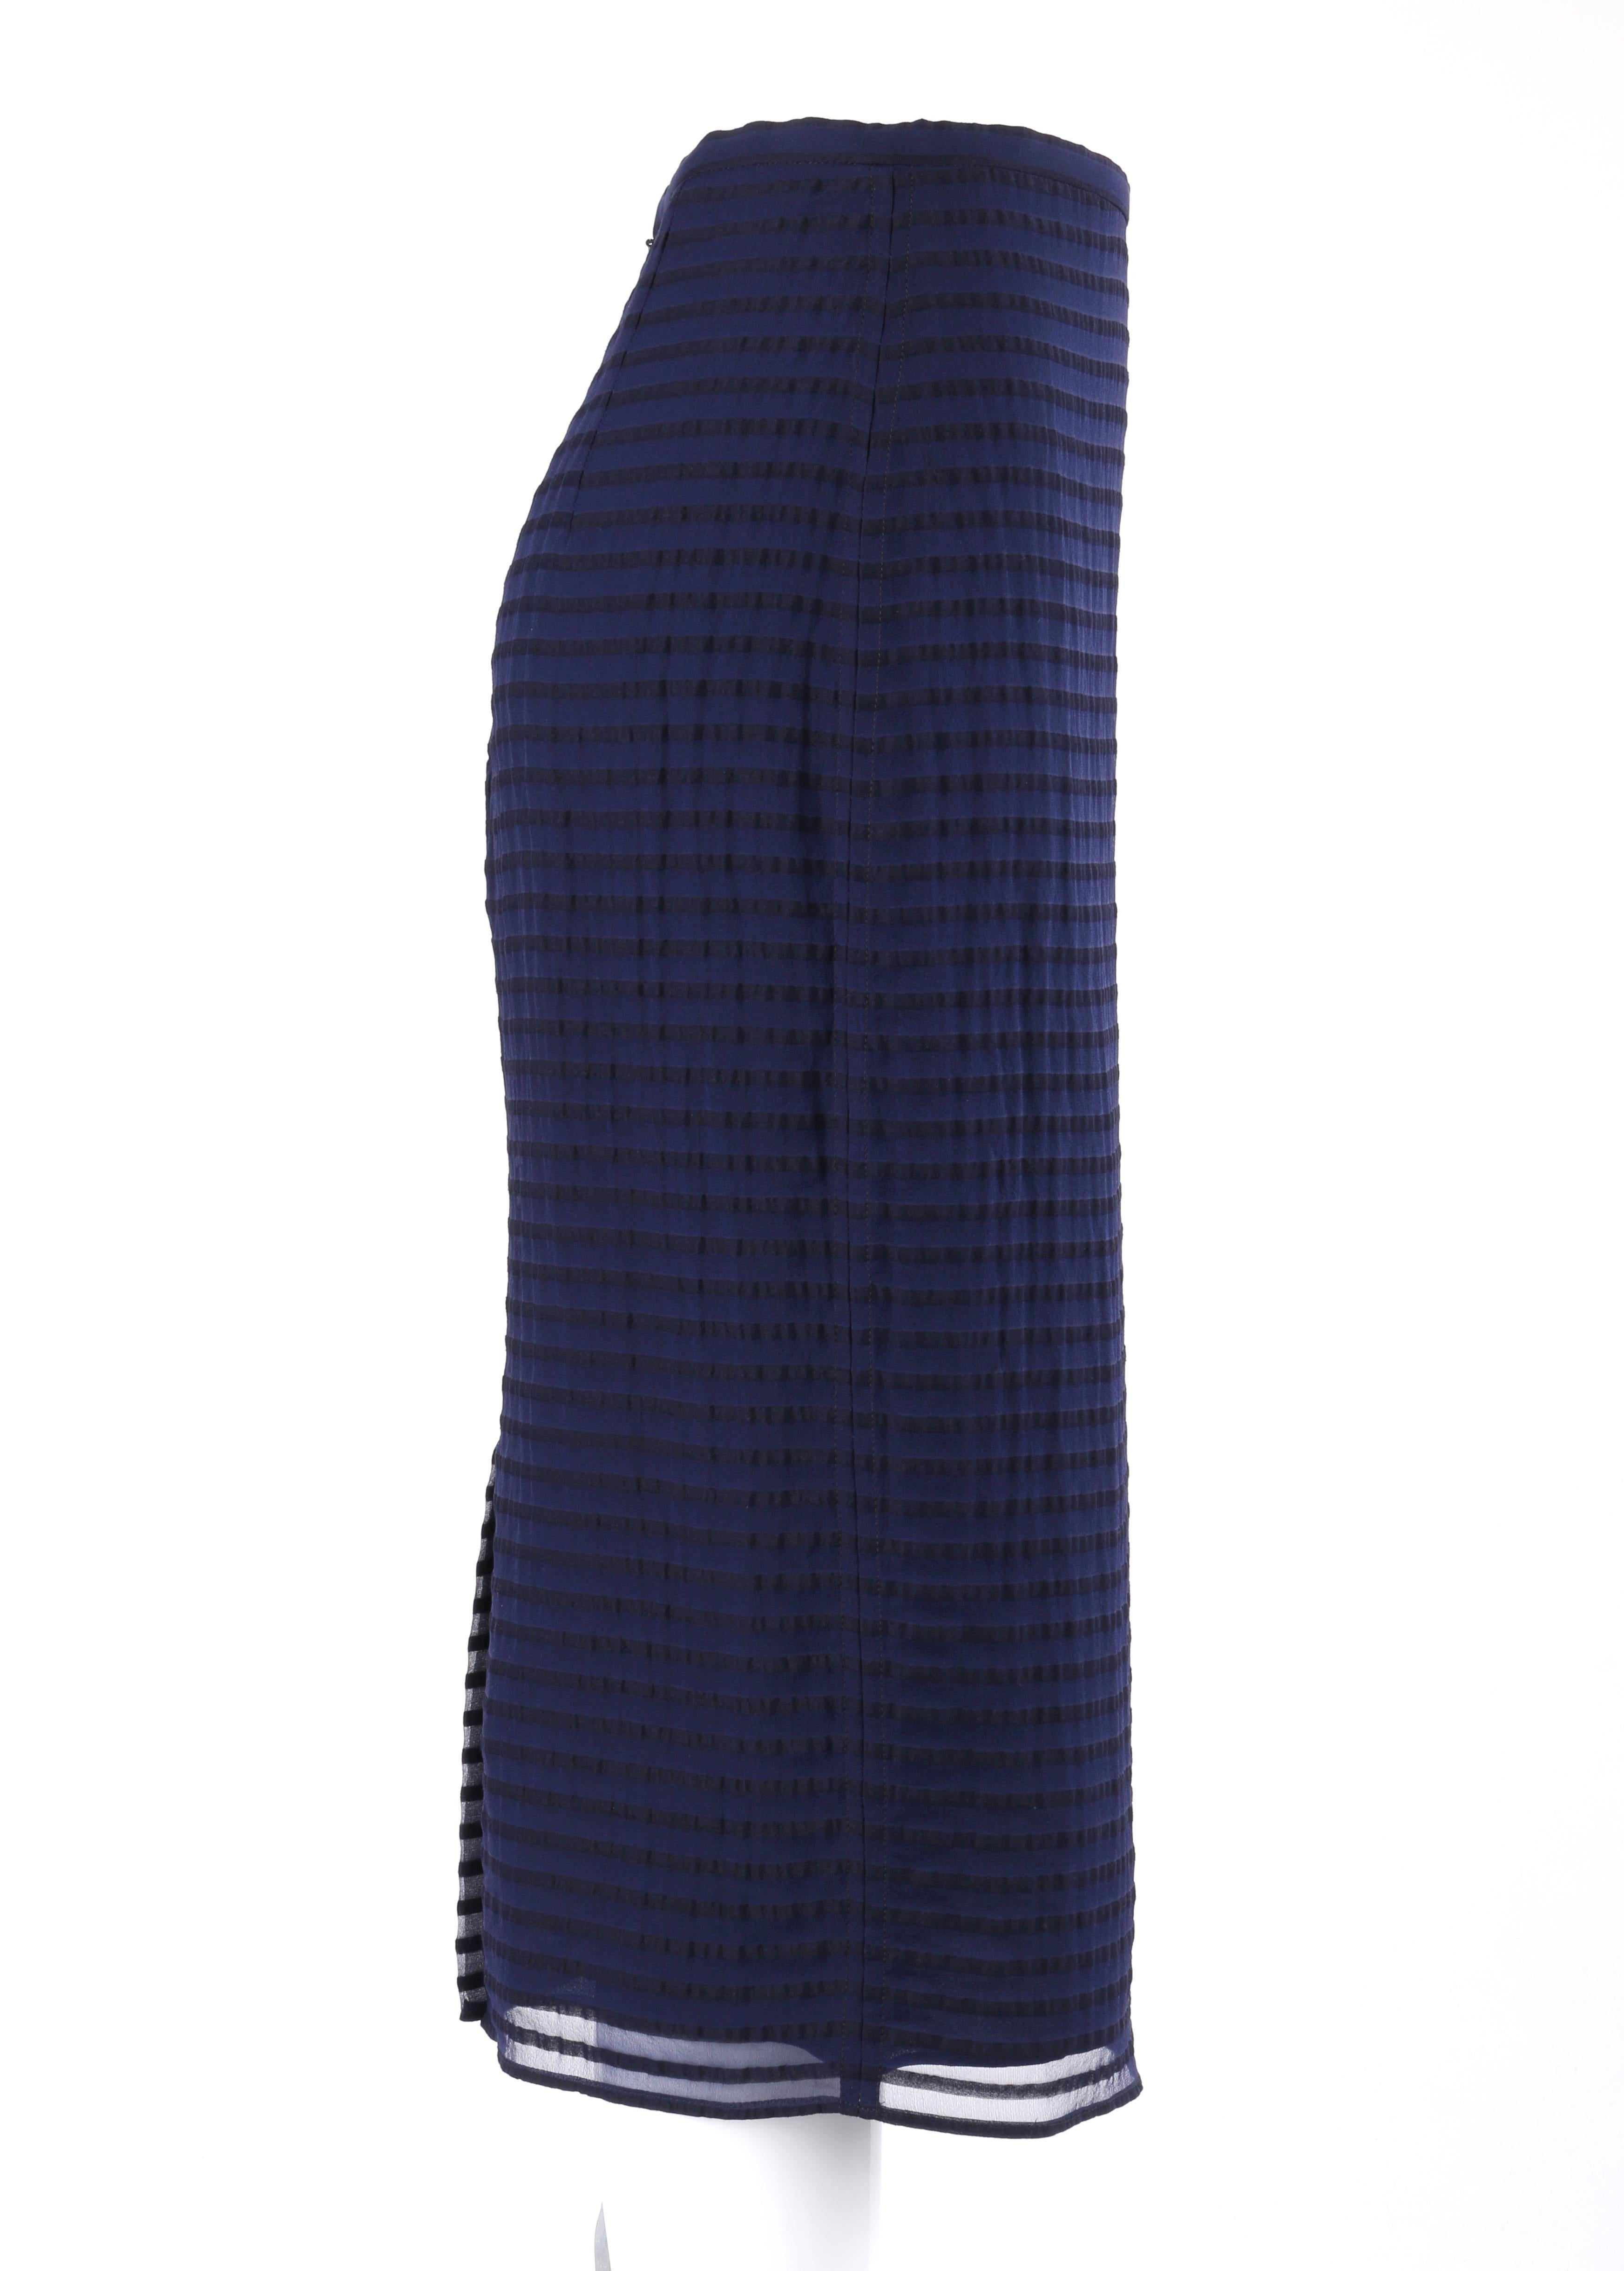 BURBERRY Prorsum Resort S/S 2015 Navy Blue Black Striped Midi Pencil Skirt NWT
 
Brand / Manufacturer: Burberry 
Collection: Resort Spring / Summer 2015; runway look #9
Manufacturer Style Name: Pencil skirt	 
Color(s): Bright navy, black
Lined: